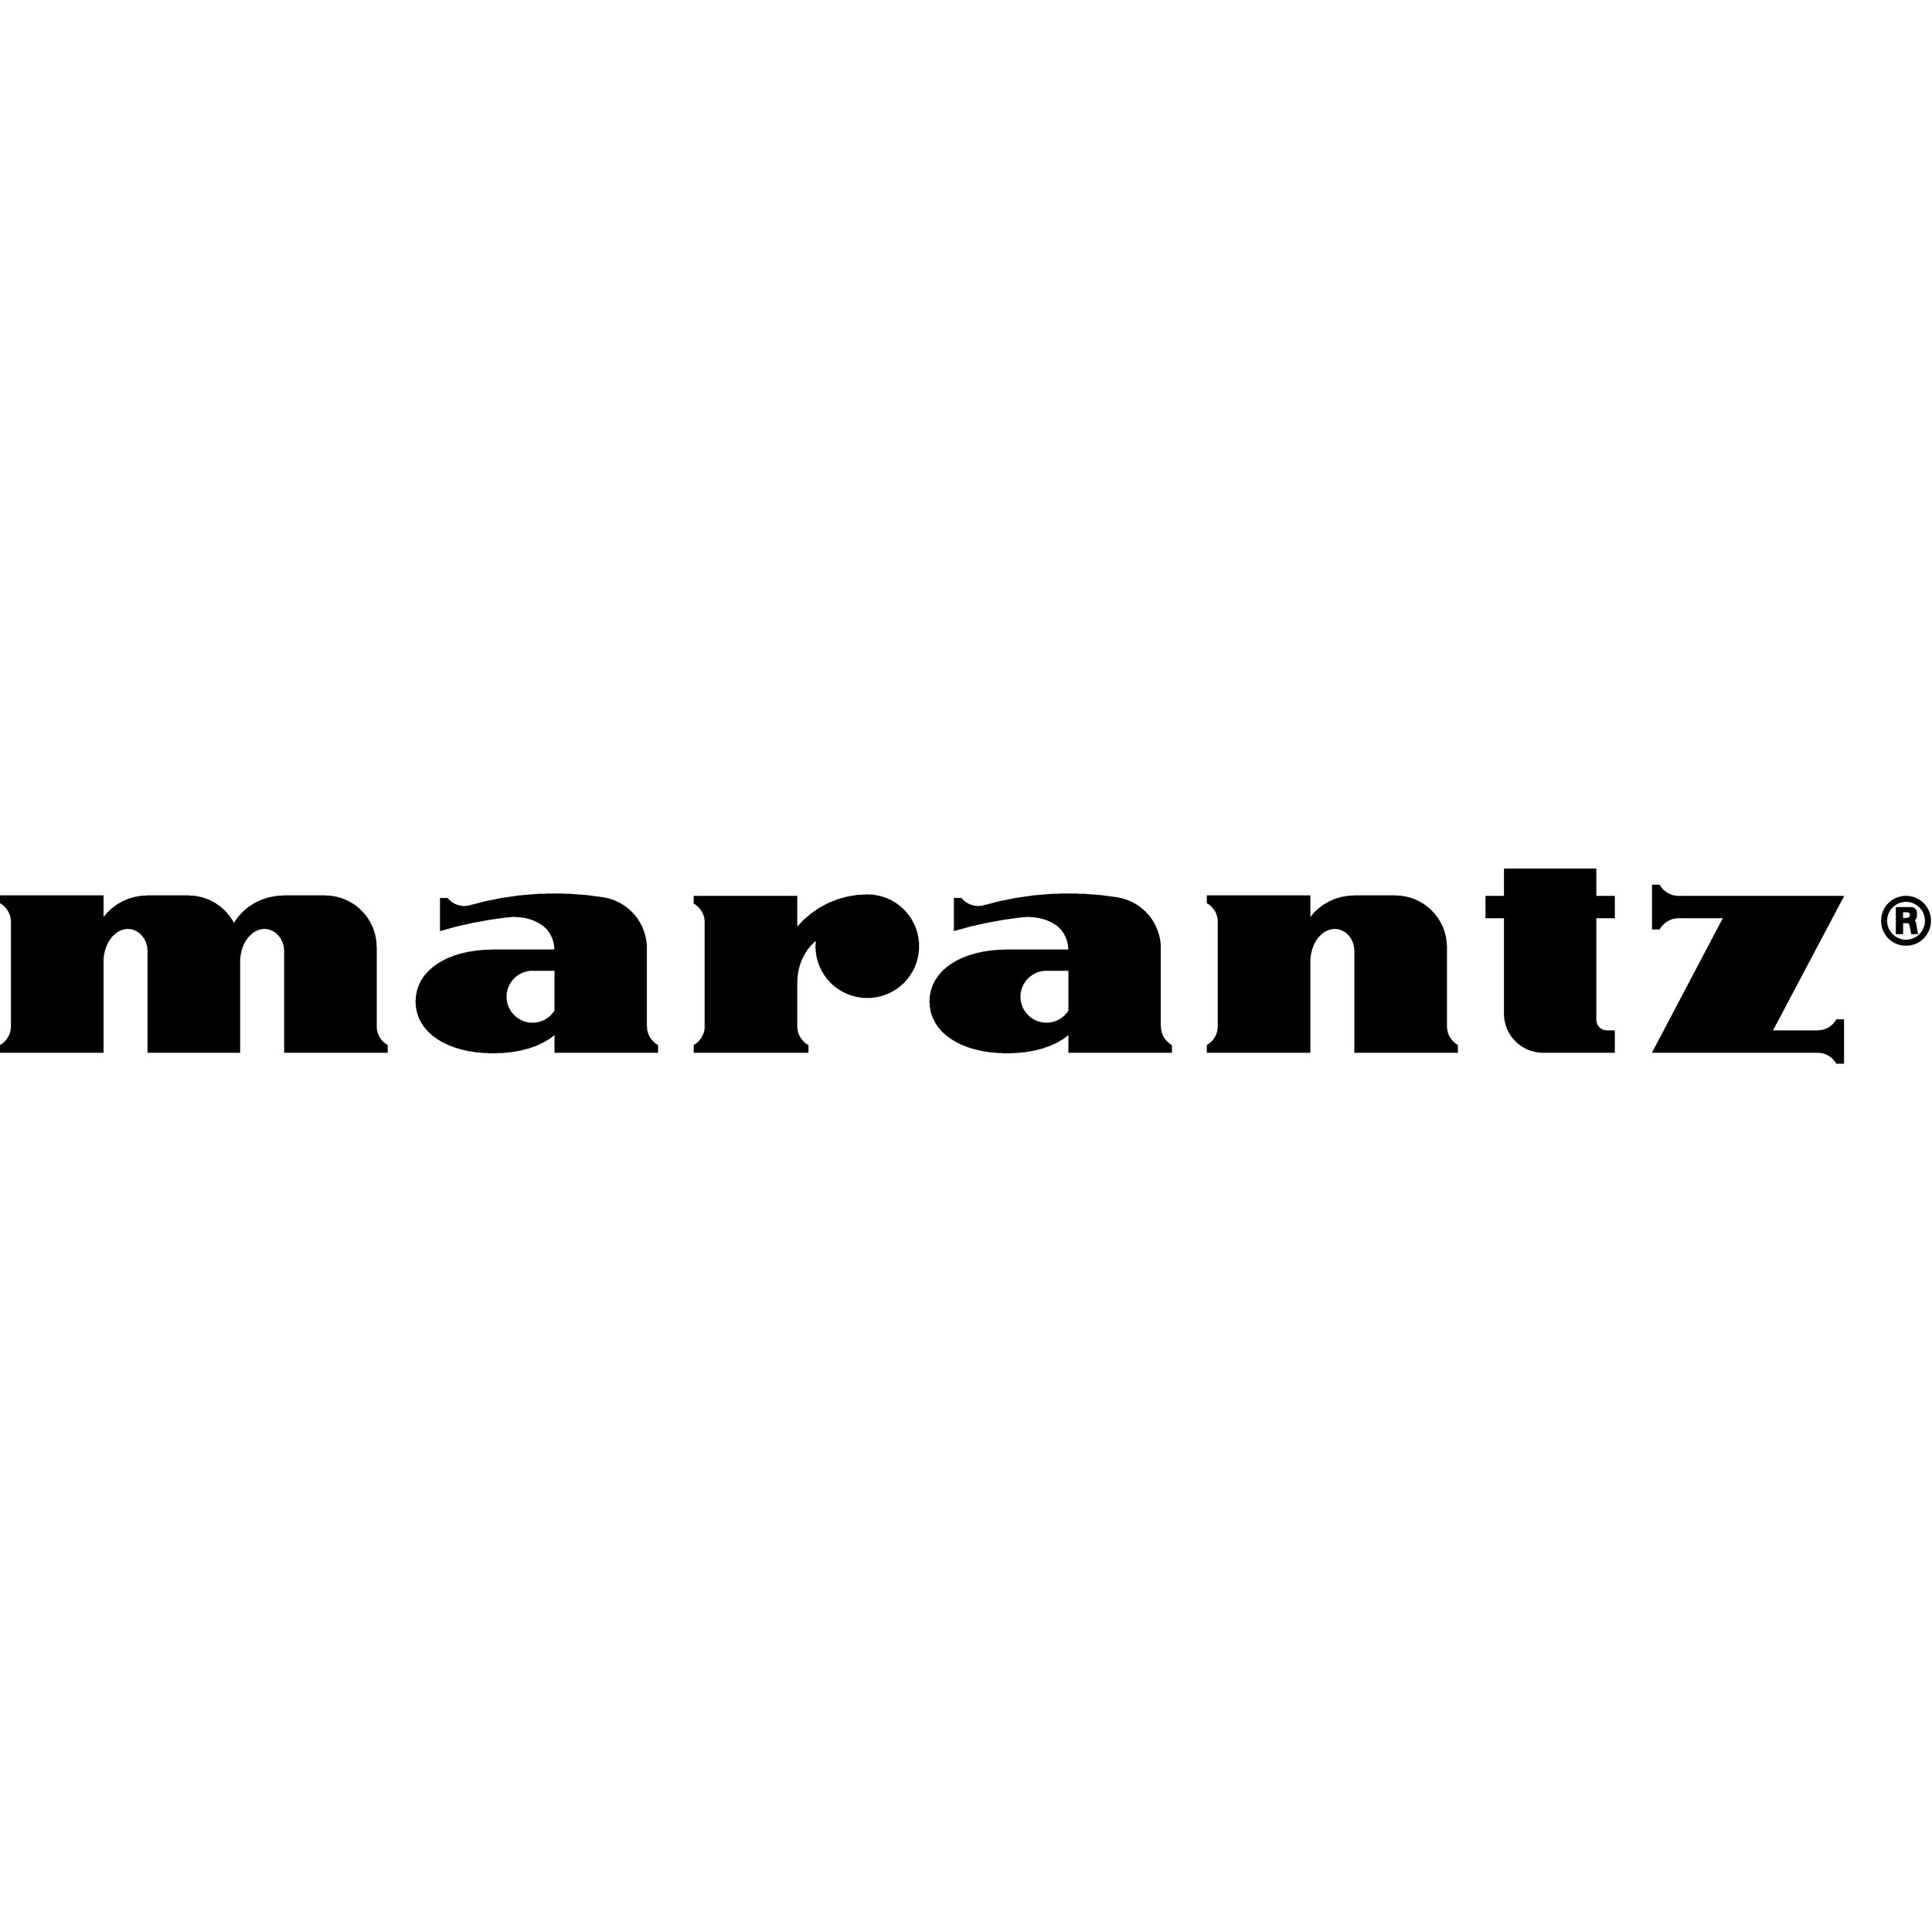 Marantz Logo b-w 7425x7425.jpg